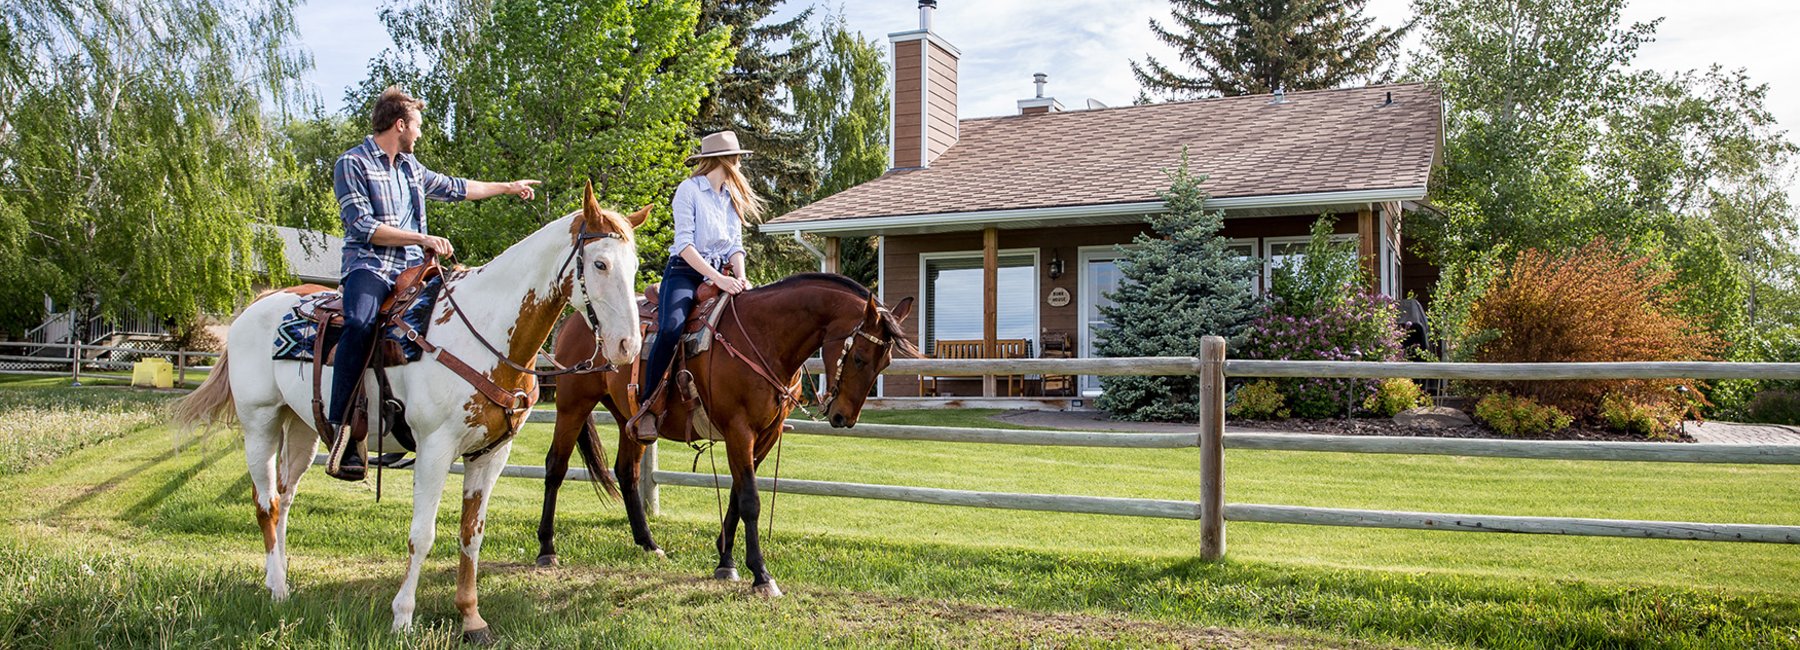 Guests horseback riding, Canadian Badlands.